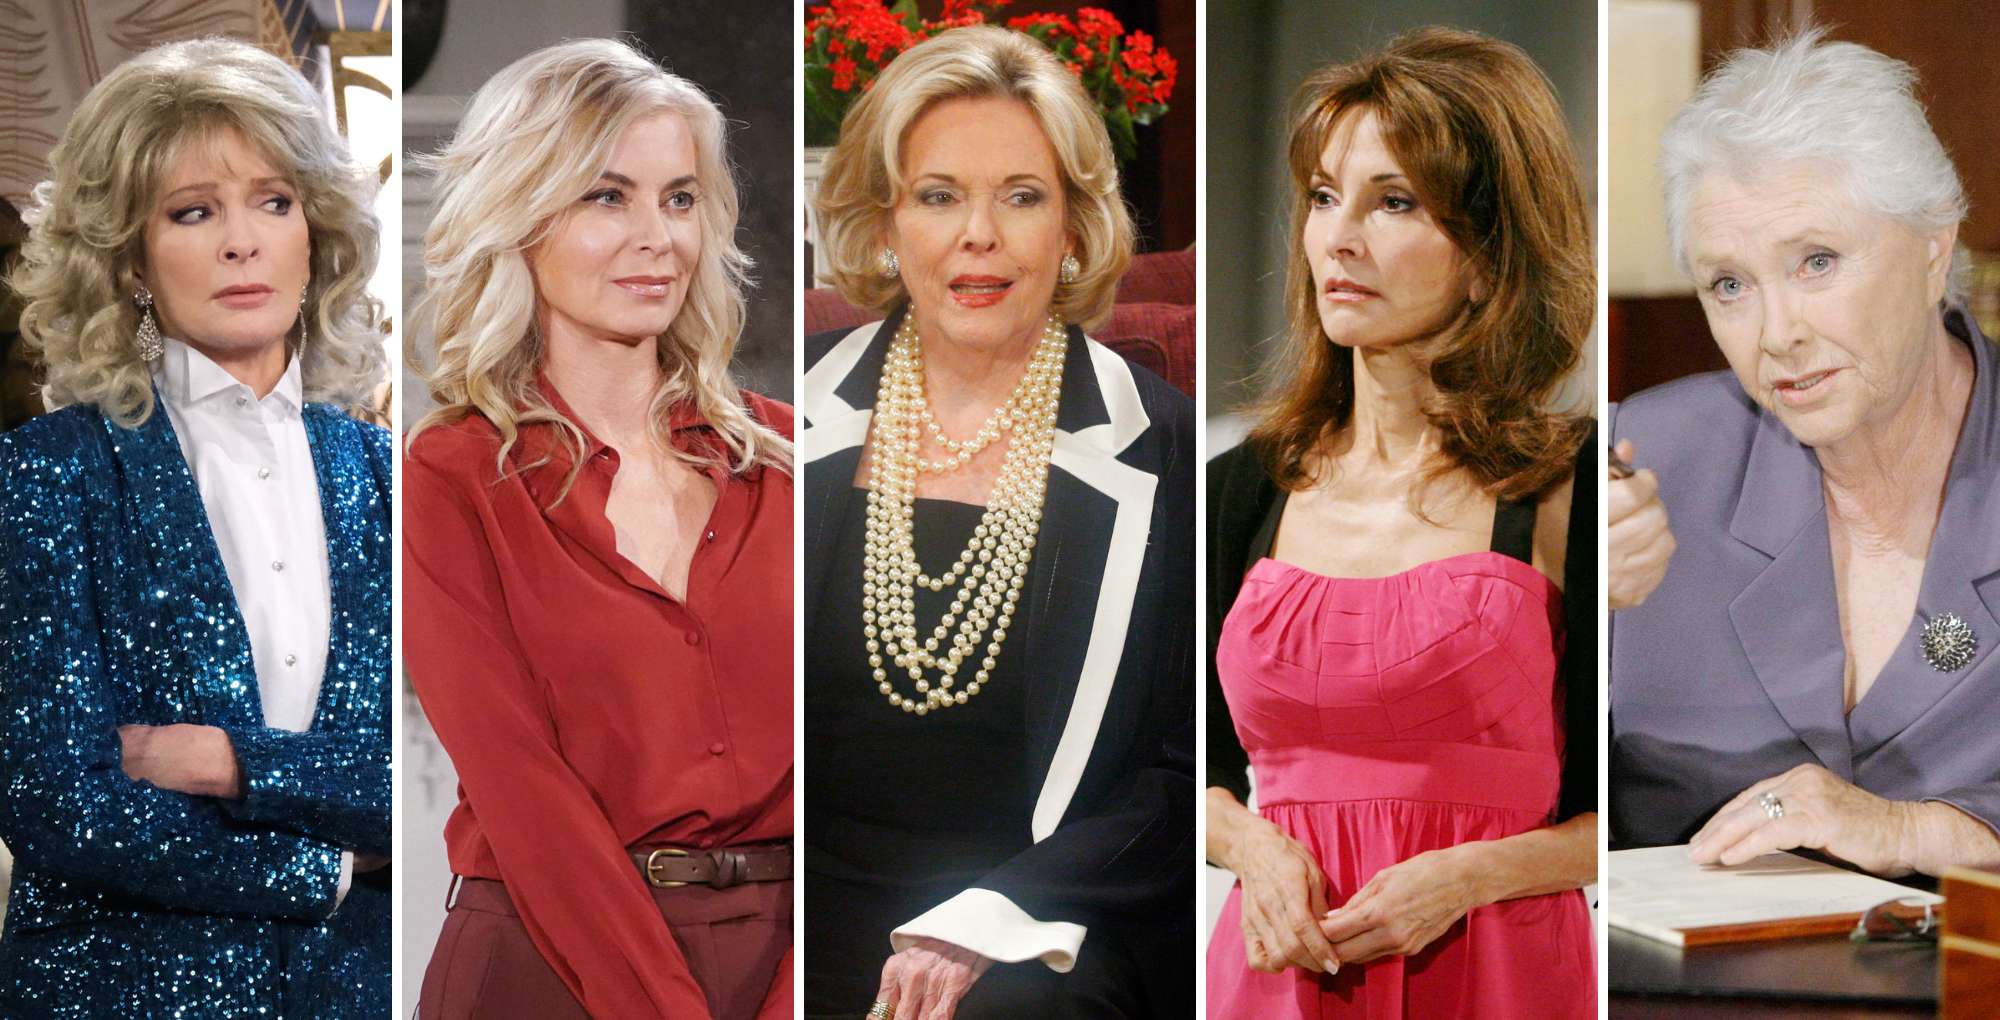 The 5 strongest women in soap operas for International Women's Day.